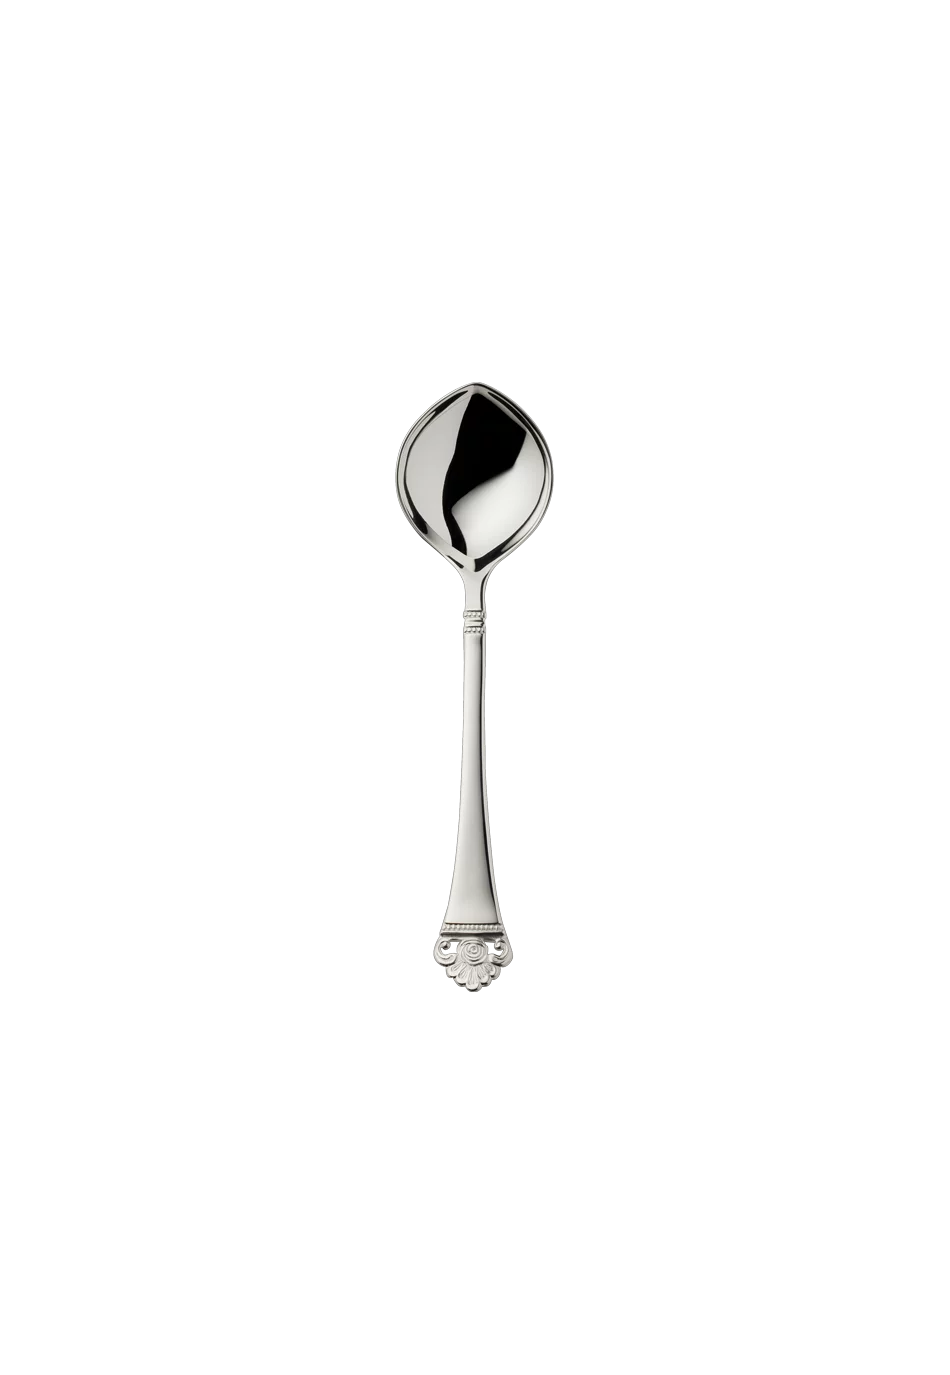 Rosenmuster Sugar Spoon (150g massive silverplated)